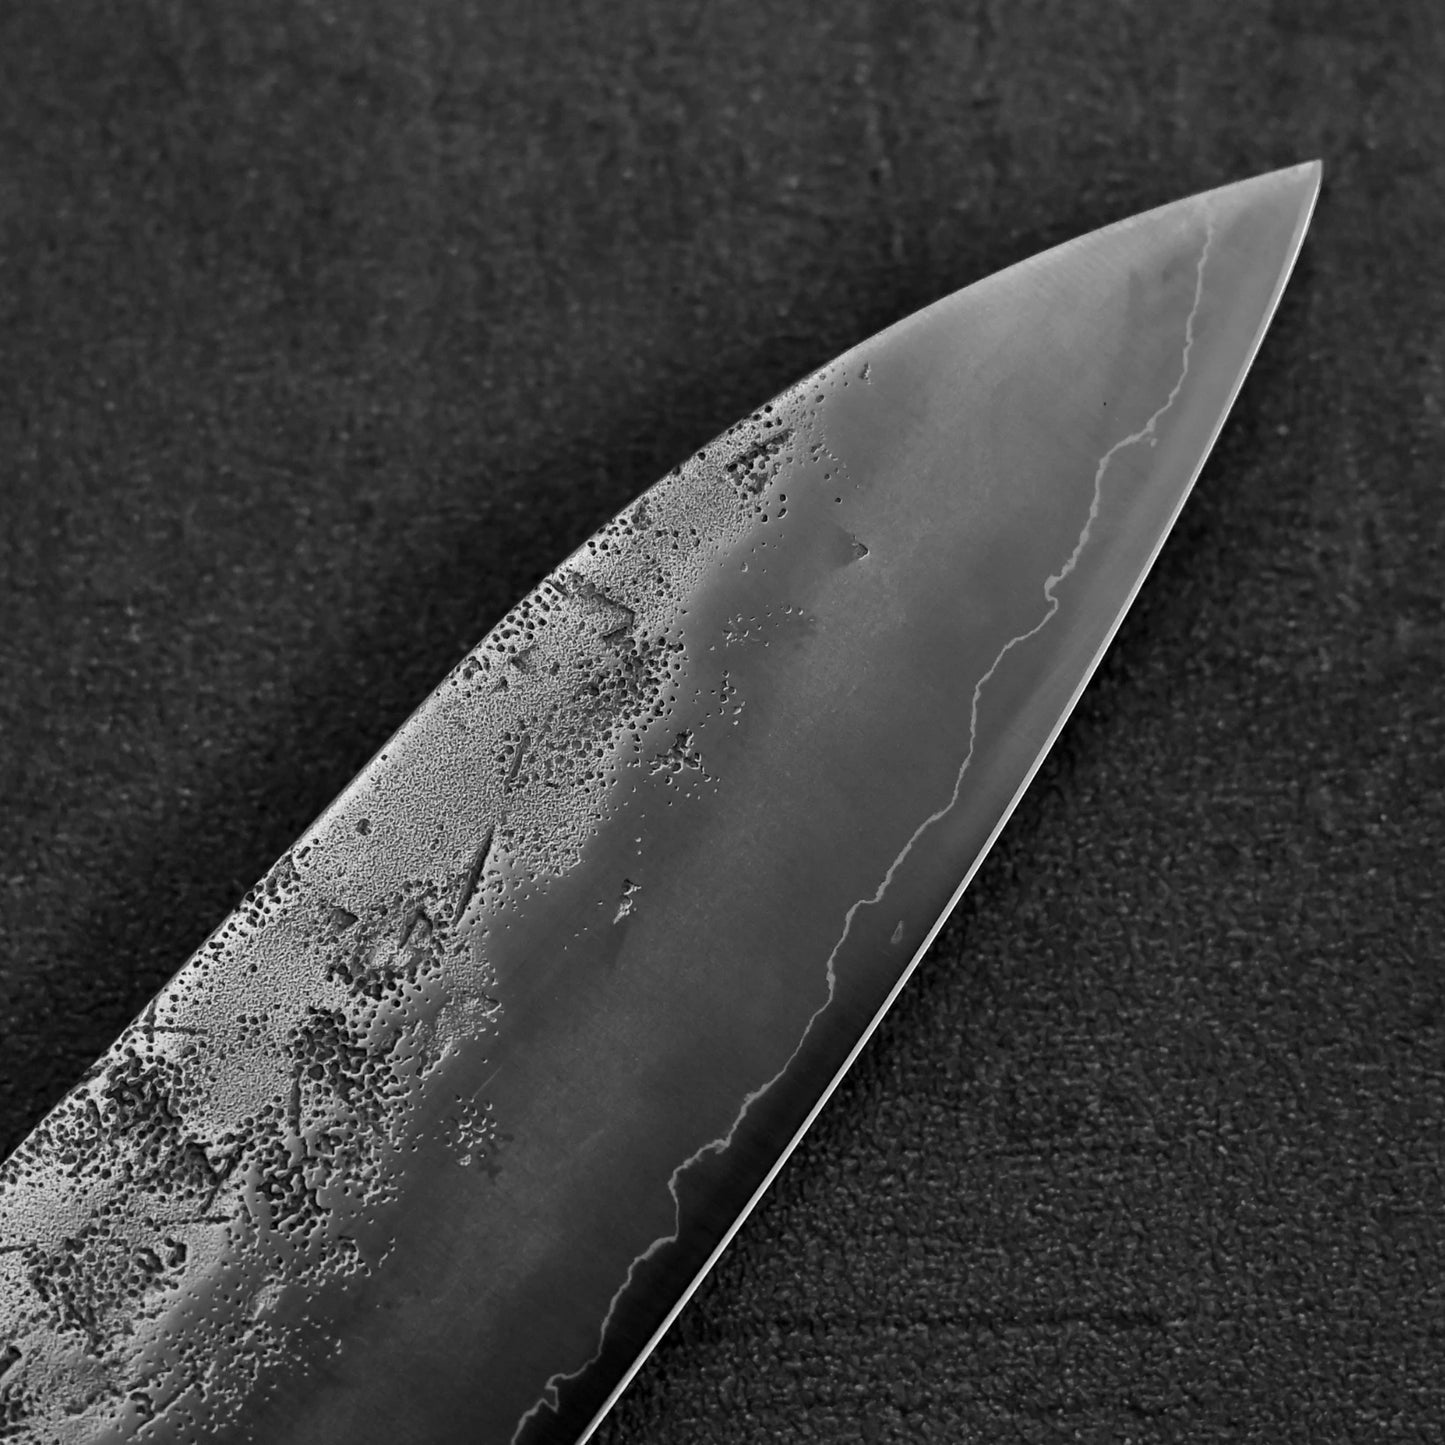 Close up view of the tip area of Tsunehisa nashiji SLD gyuto knife